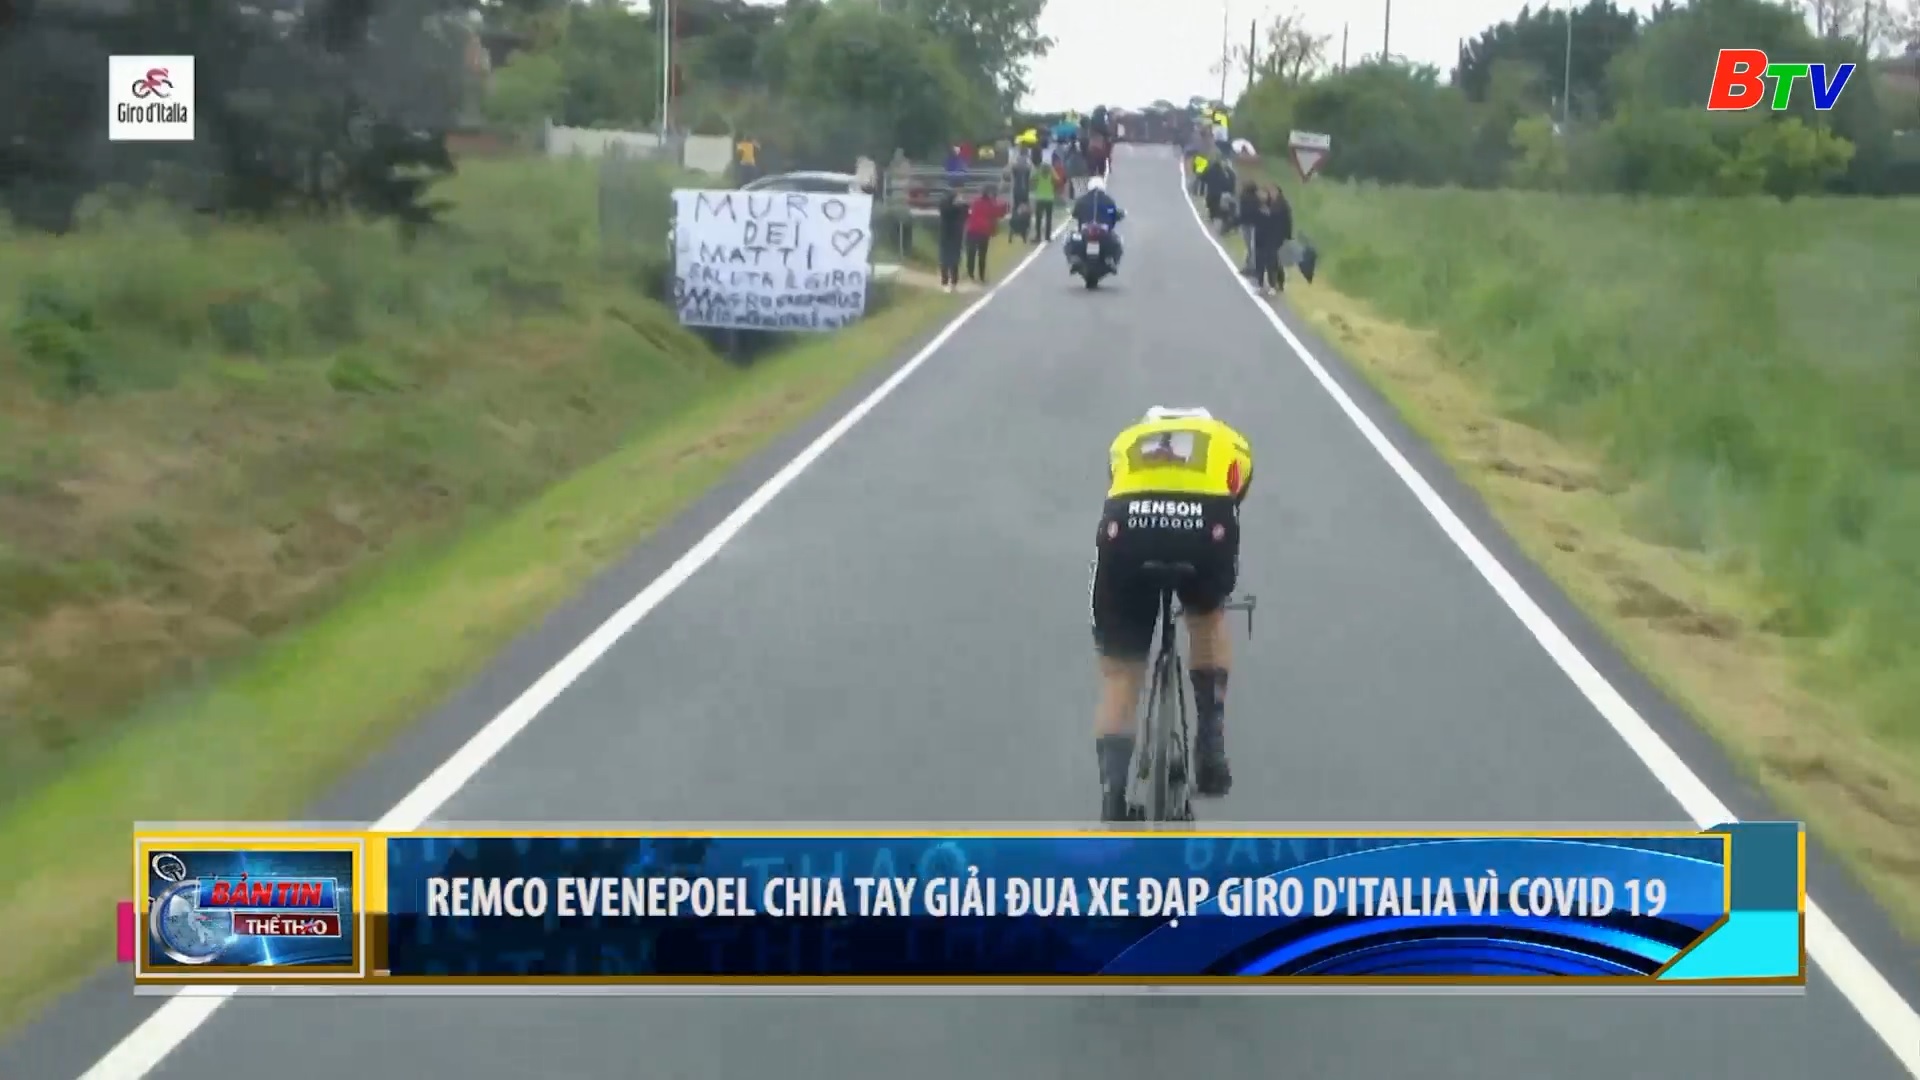 Remco Evenepoel chia tay giải đua xe đạp Giro D’italia vì Covid 19